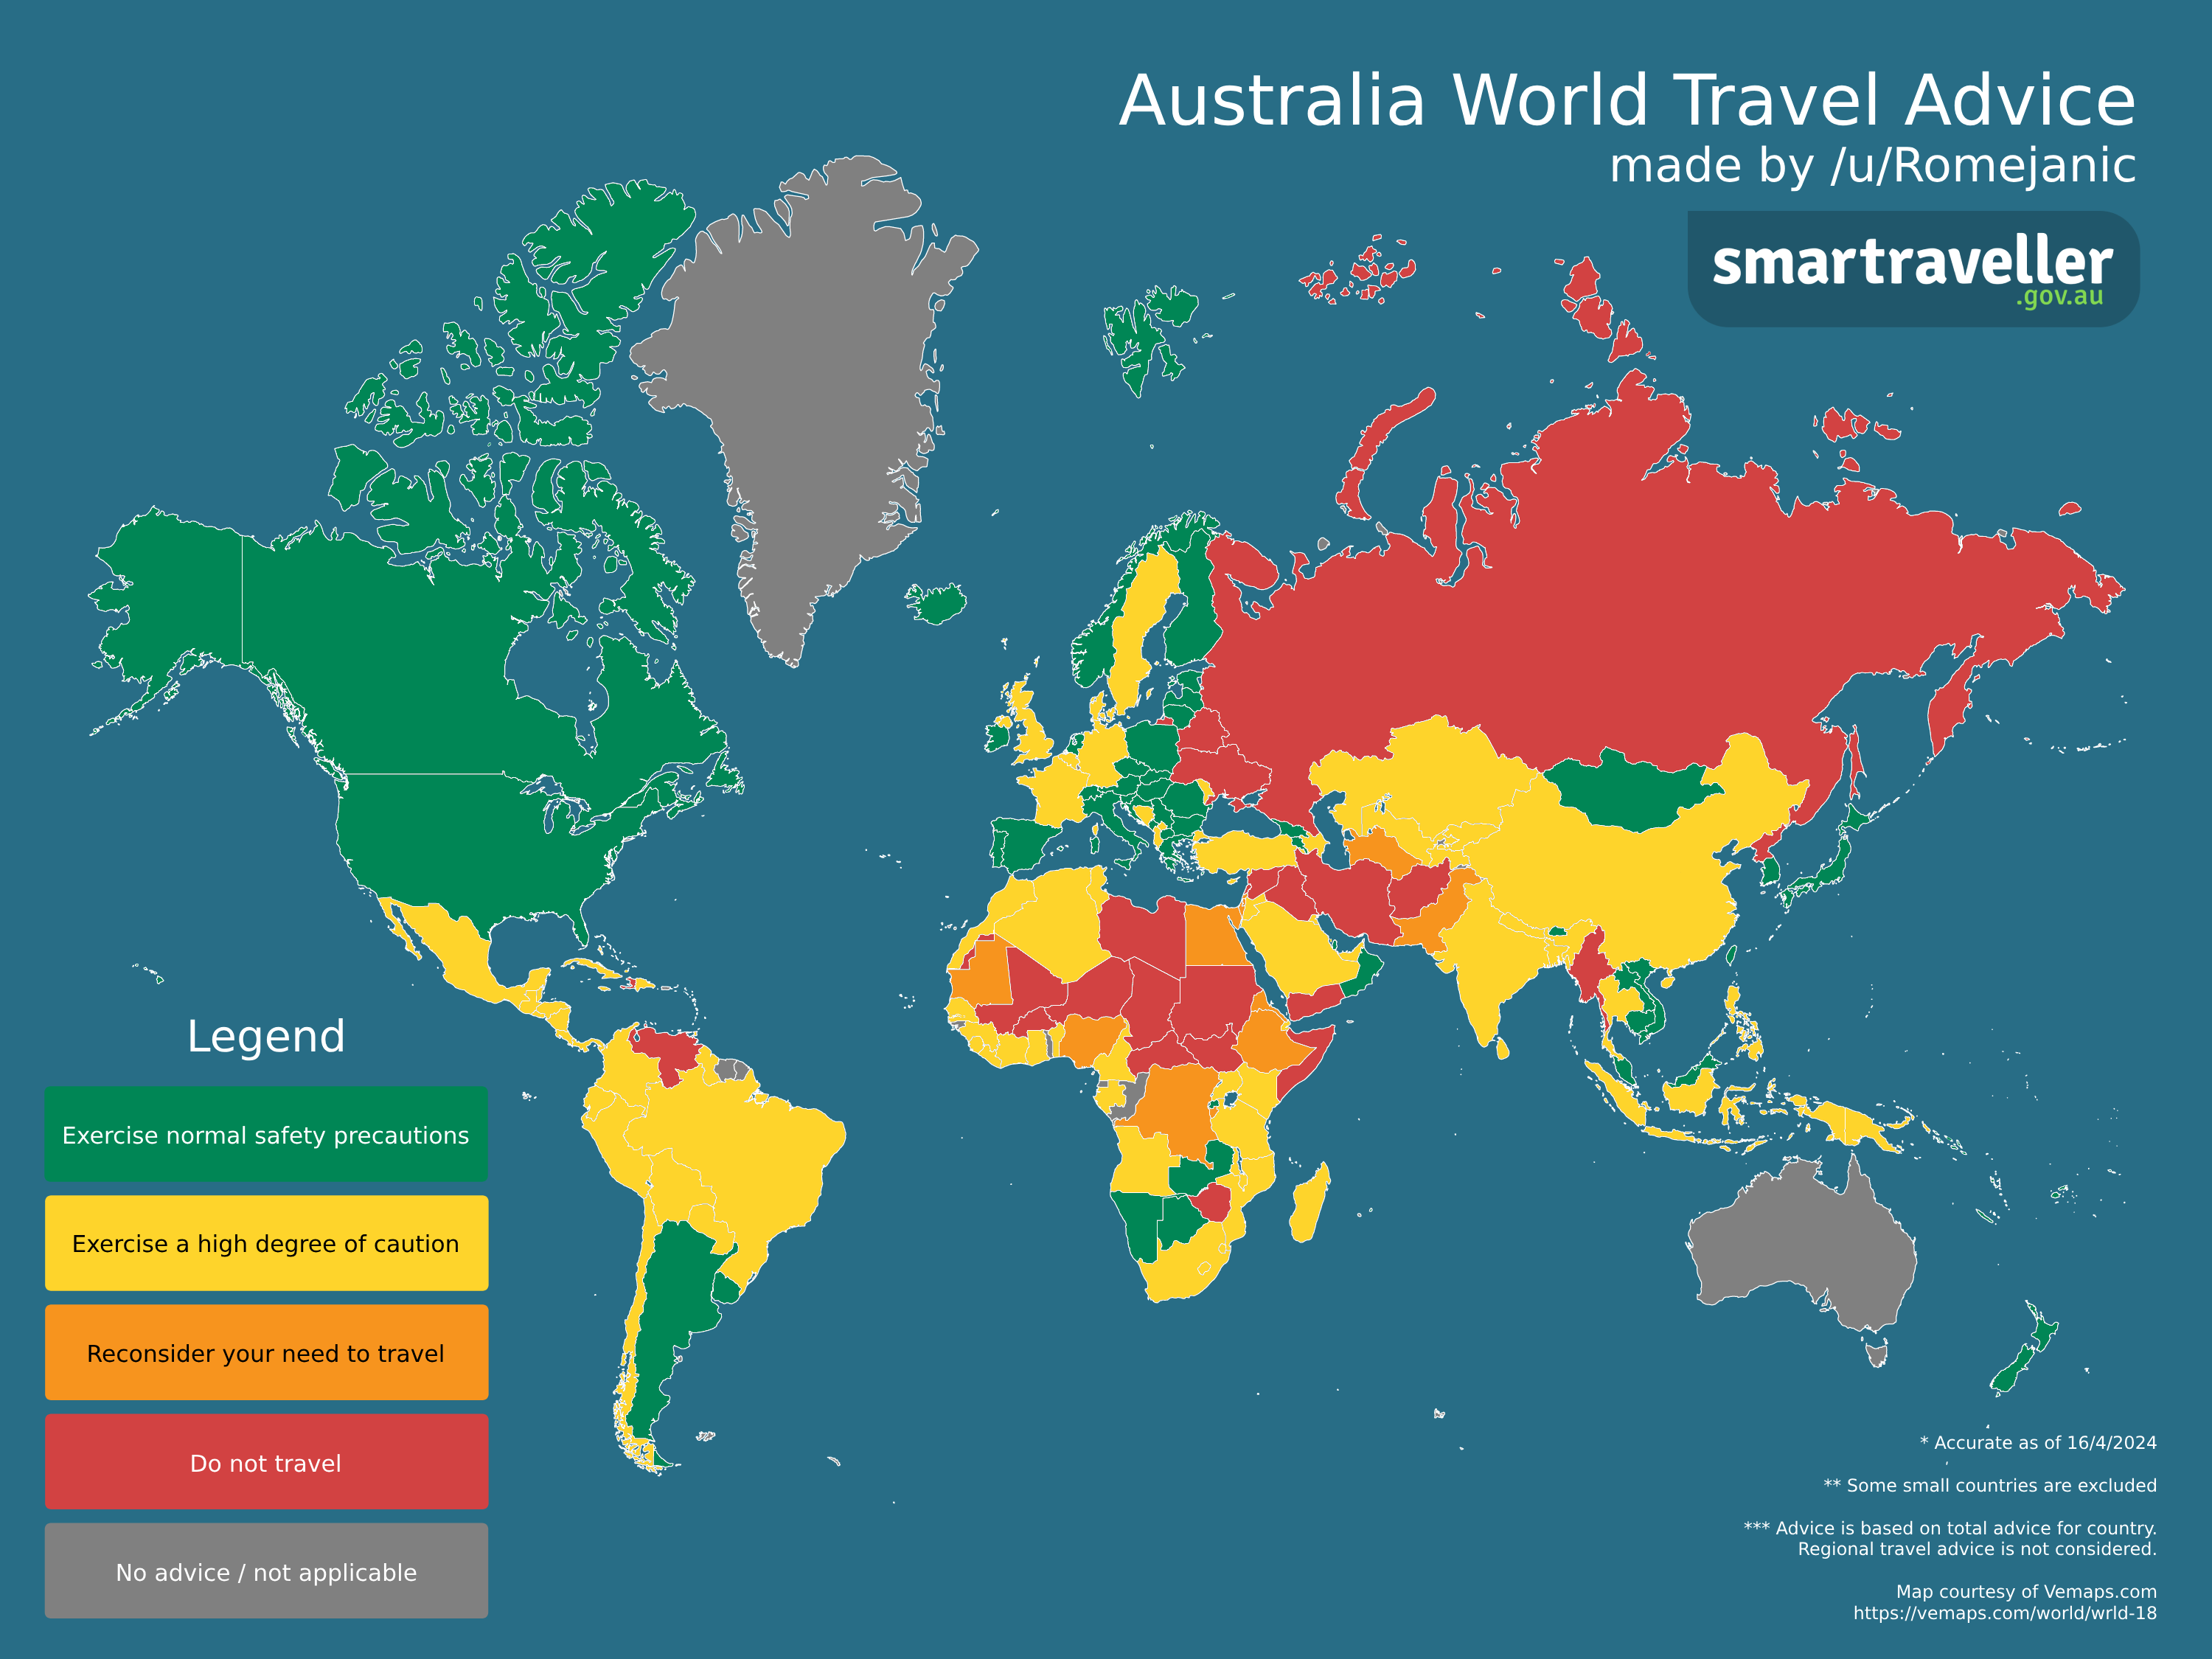 r/dataisbeautiful - [OC] World map by Australian travel advice